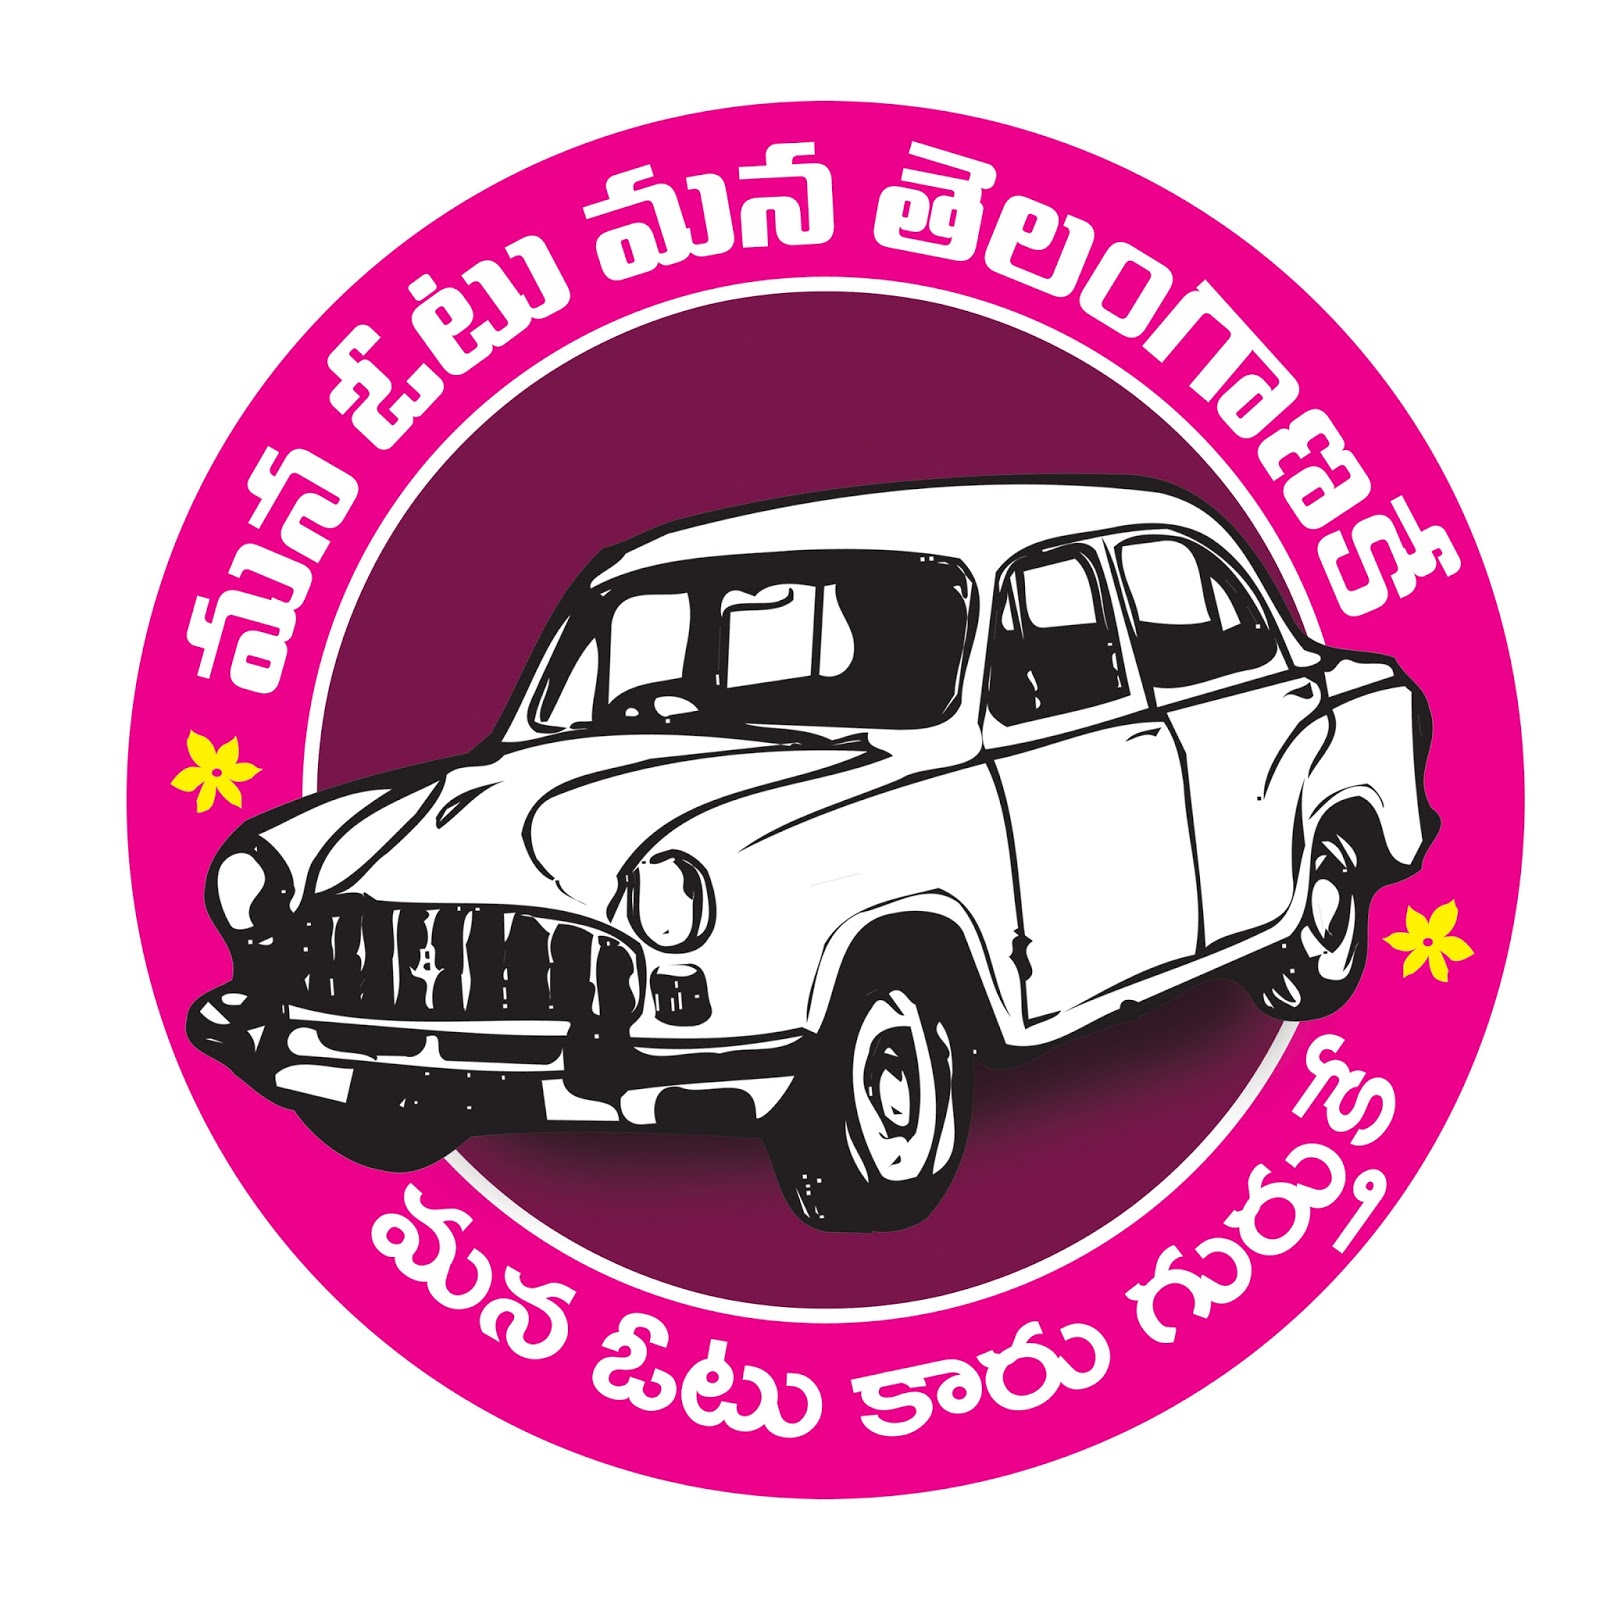 telangana rashtra samithi TRS HD logo for Elections | naveengfx